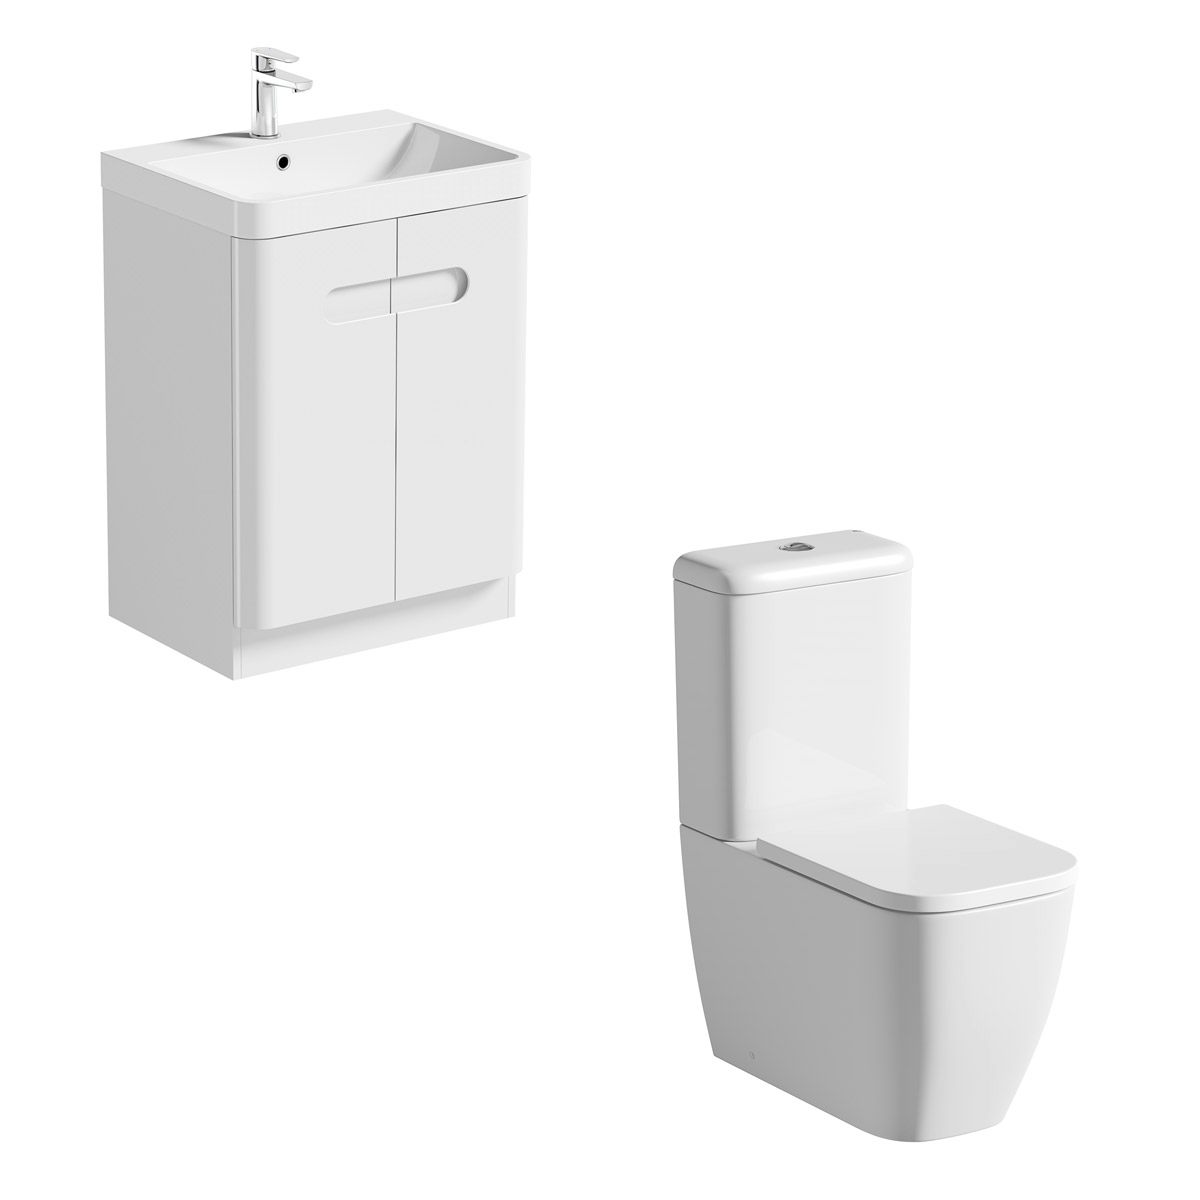 Mode Ellis close coupled toilet and white vanity unit suite 600mm